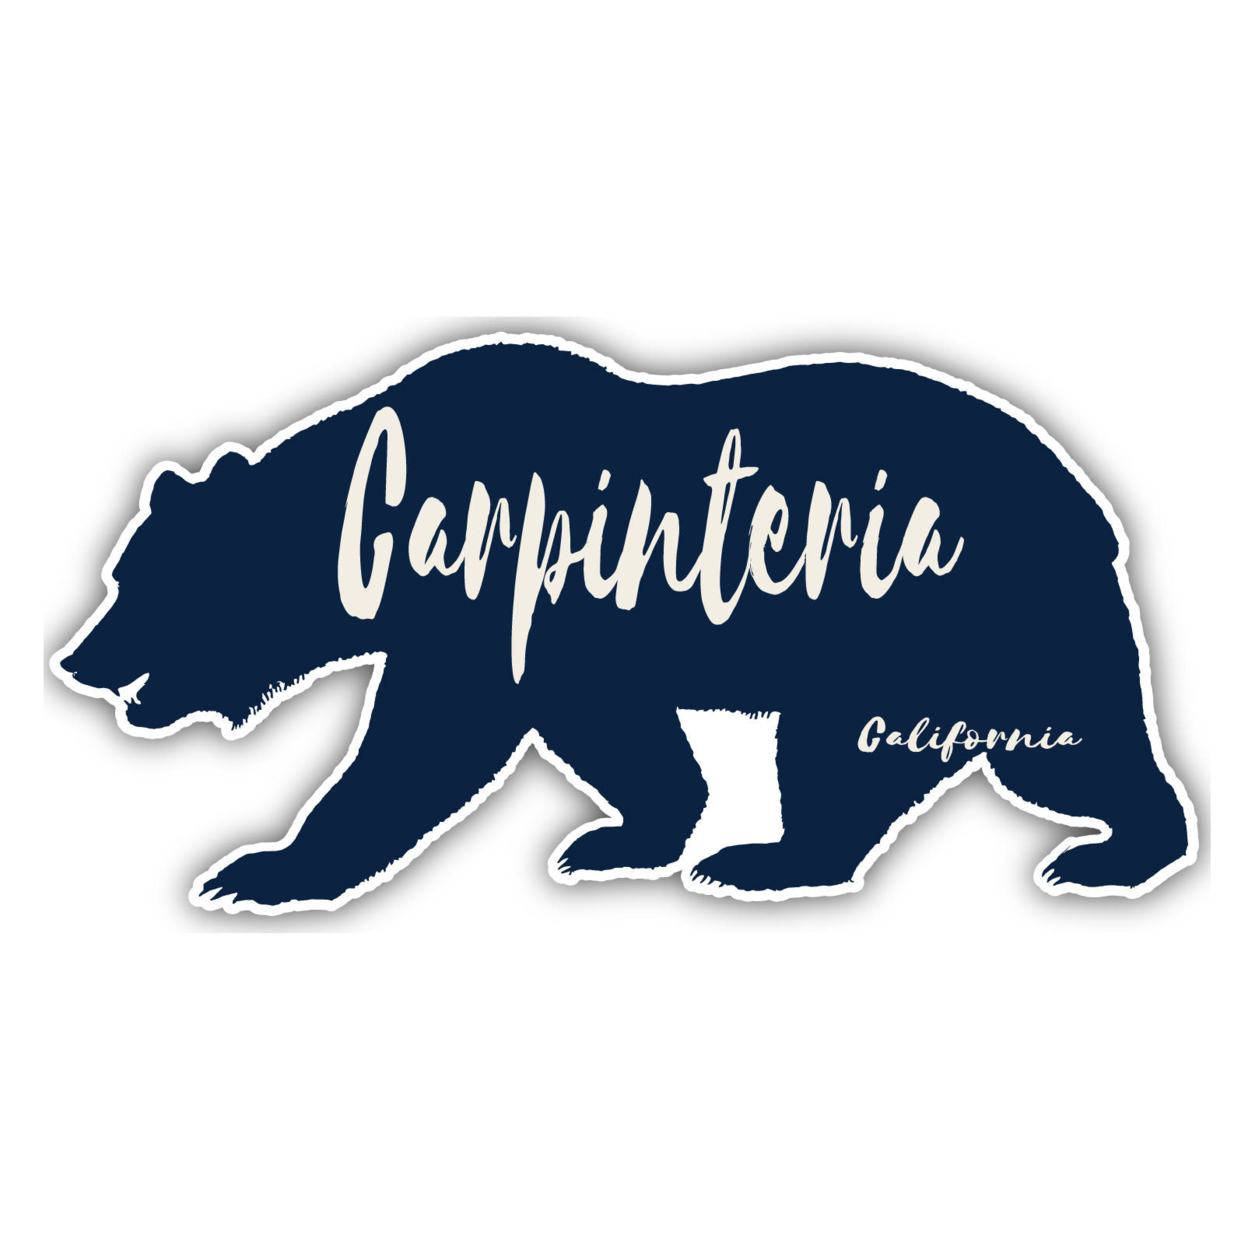 Carpinteria California Souvenir Decorative Stickers (Choose Theme And Size) - 4-Pack, 12-Inch, Camp Life